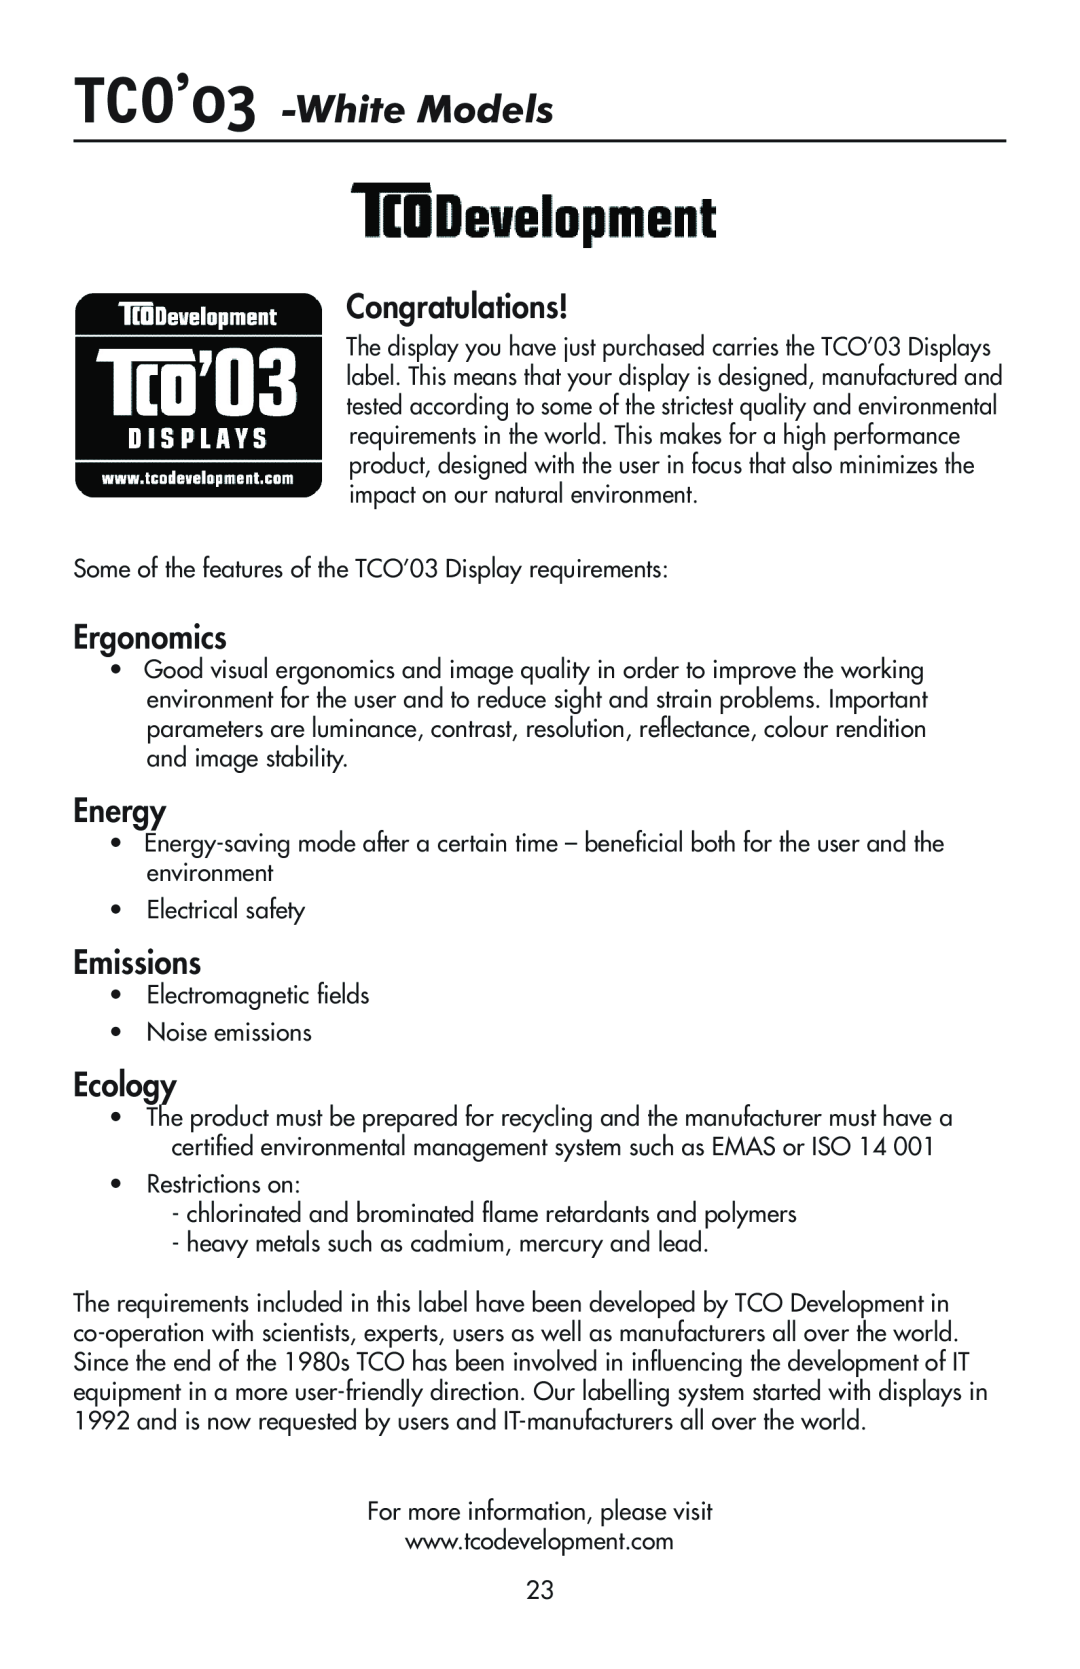 NEC LCD1970V user manual TCO’03 -WhiteModels, Congratulations, Ergonomics, Energy, Emissions, Ecology 